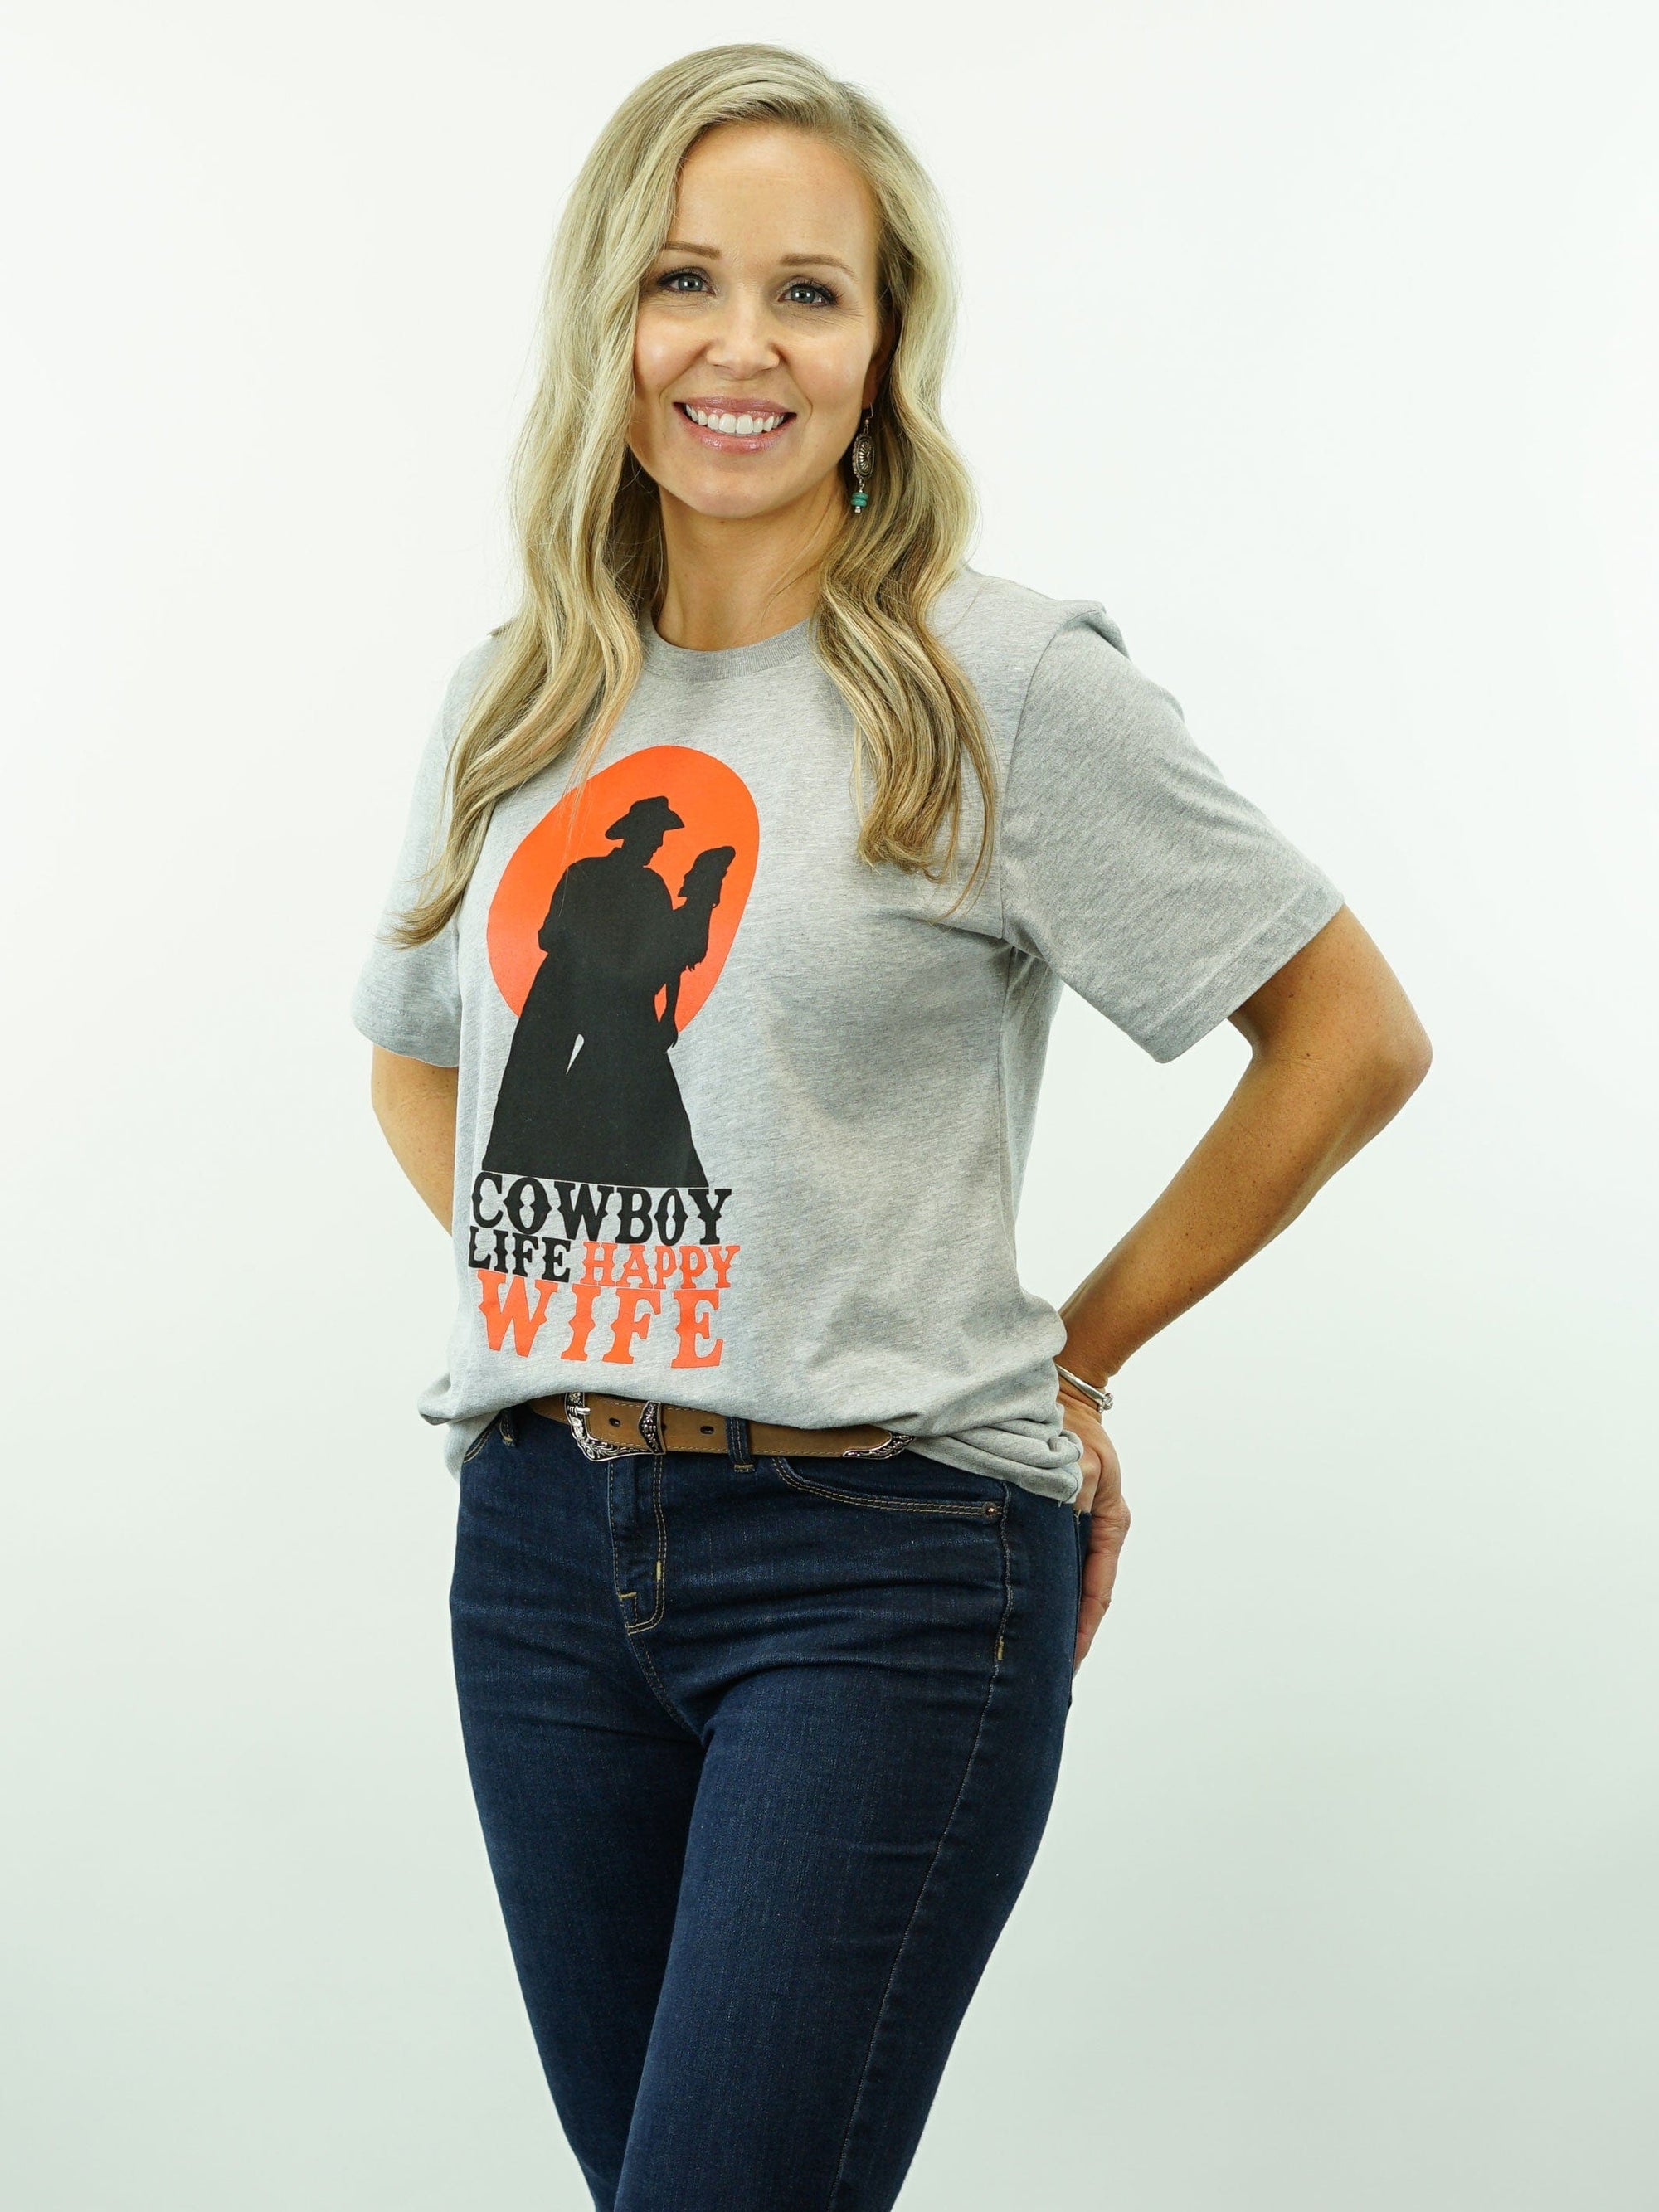 Drover Cowboy Threads Shirts T-Shirt - Cowboy Life Happy Wife - Grey